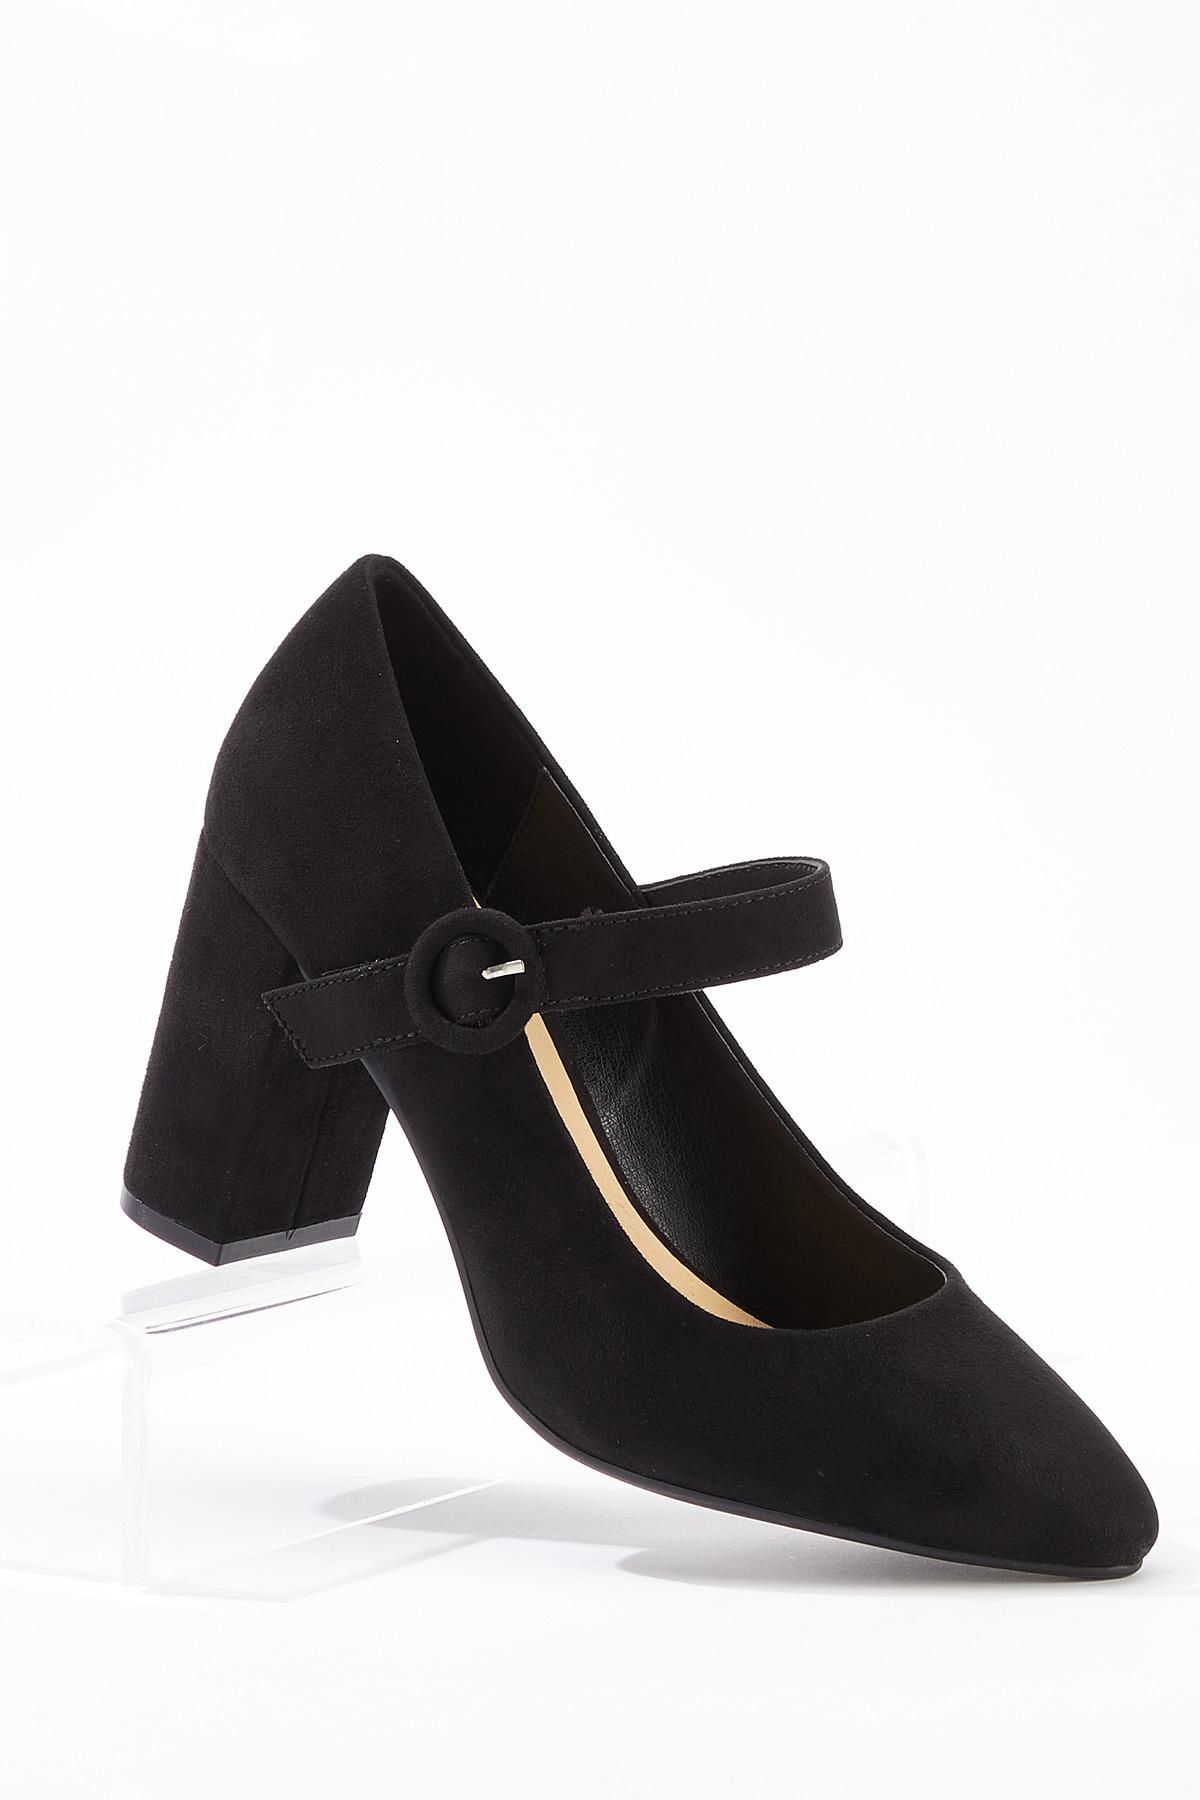 Wide Width Black Mary Jane Heels | Cato Fashions